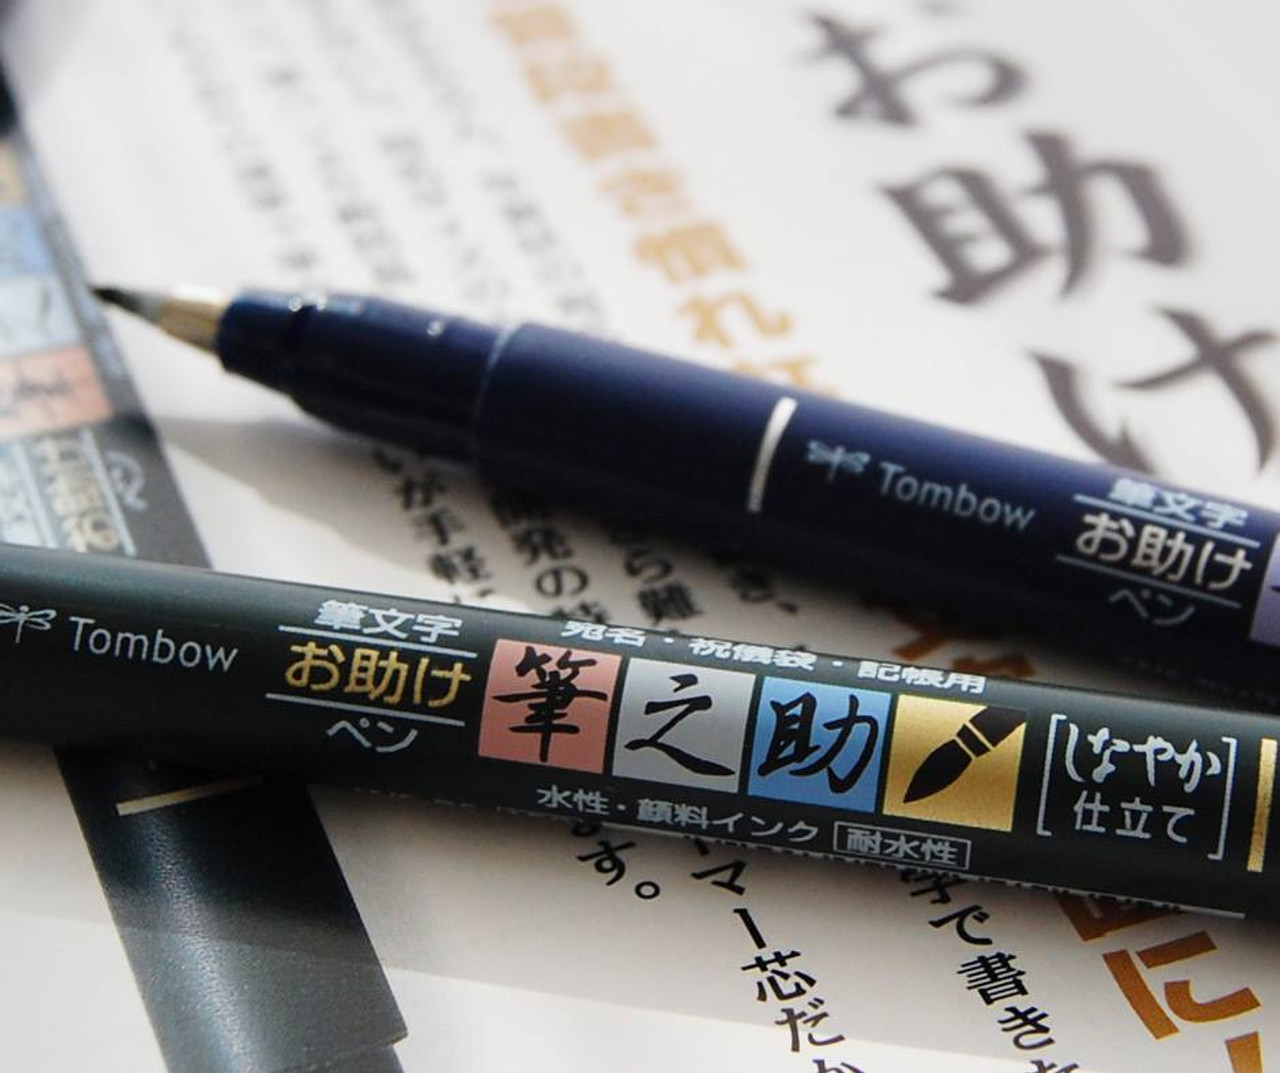 Tombow Fudenosuke Double-Sided Marker Water Based Calligraphy Pen –  Japanese Taste